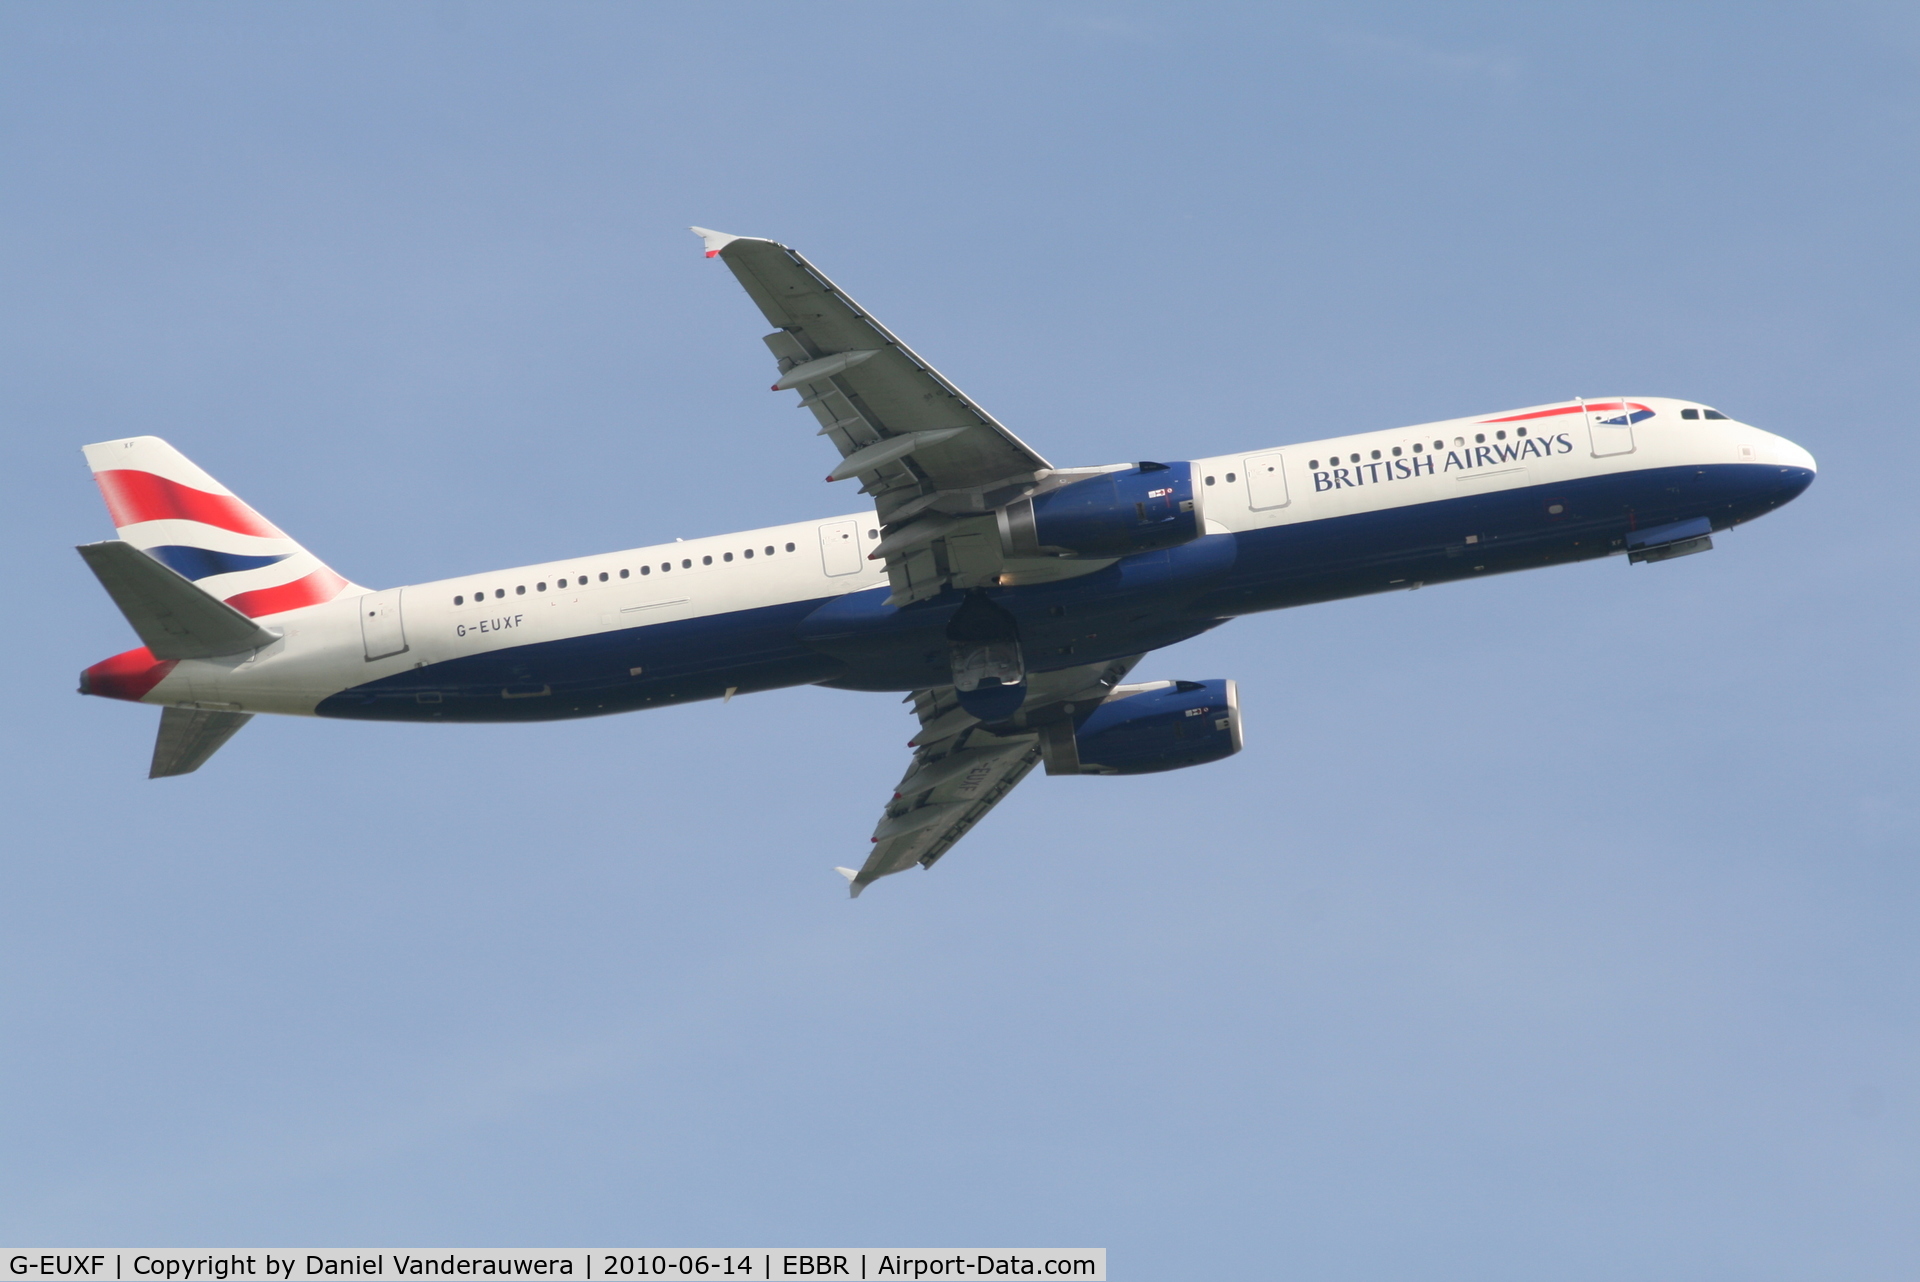 G-EUXF, 2004 Airbus A321-231 C/N 2324, Flight BA391 is taking off from RWY 07R